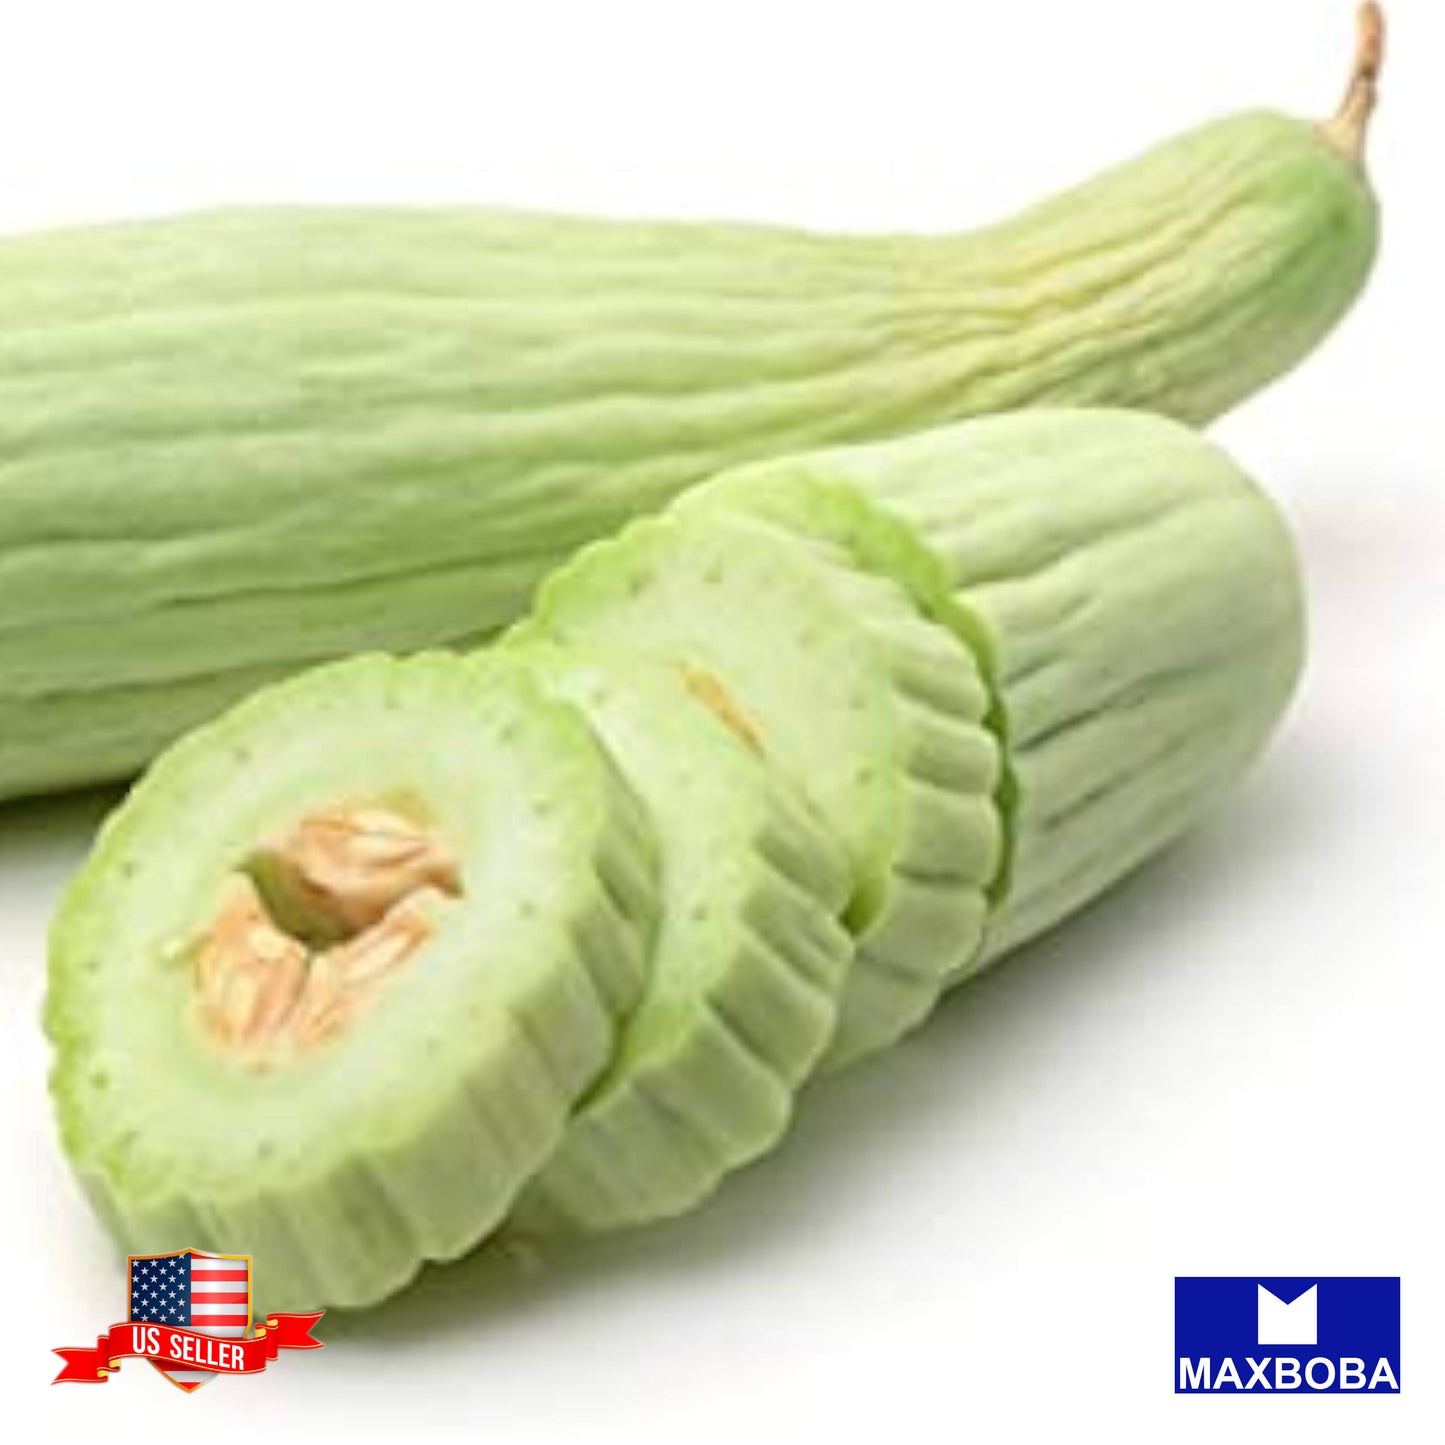 Non-GMO Cucumber Yard Long Seeds - Armenian - Organic Heirloom